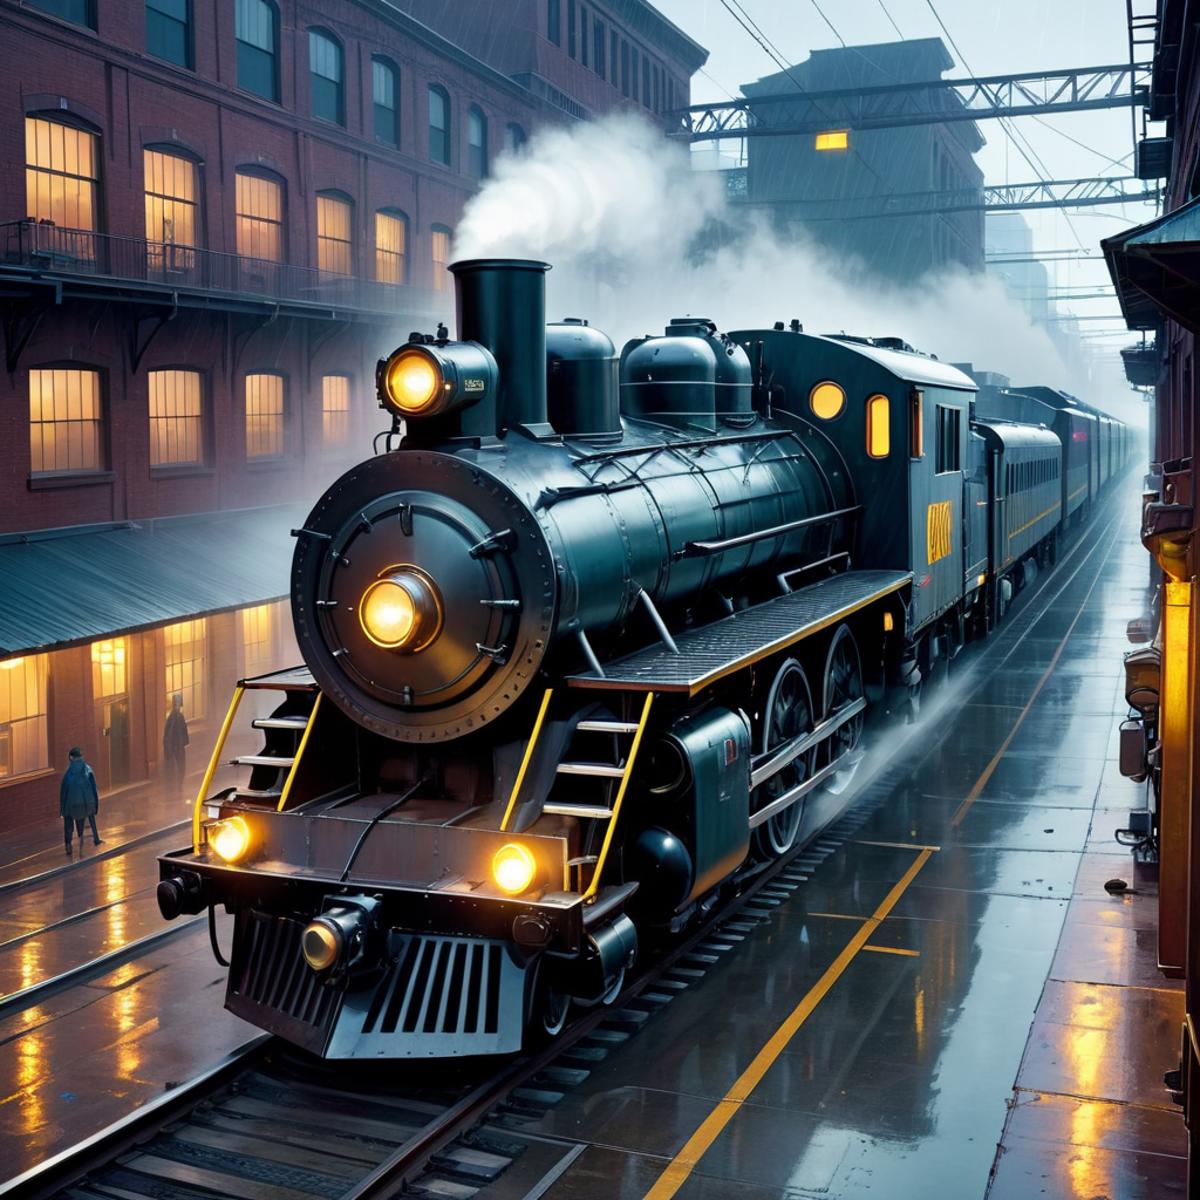 A steam engine train traveling down a rainy street.